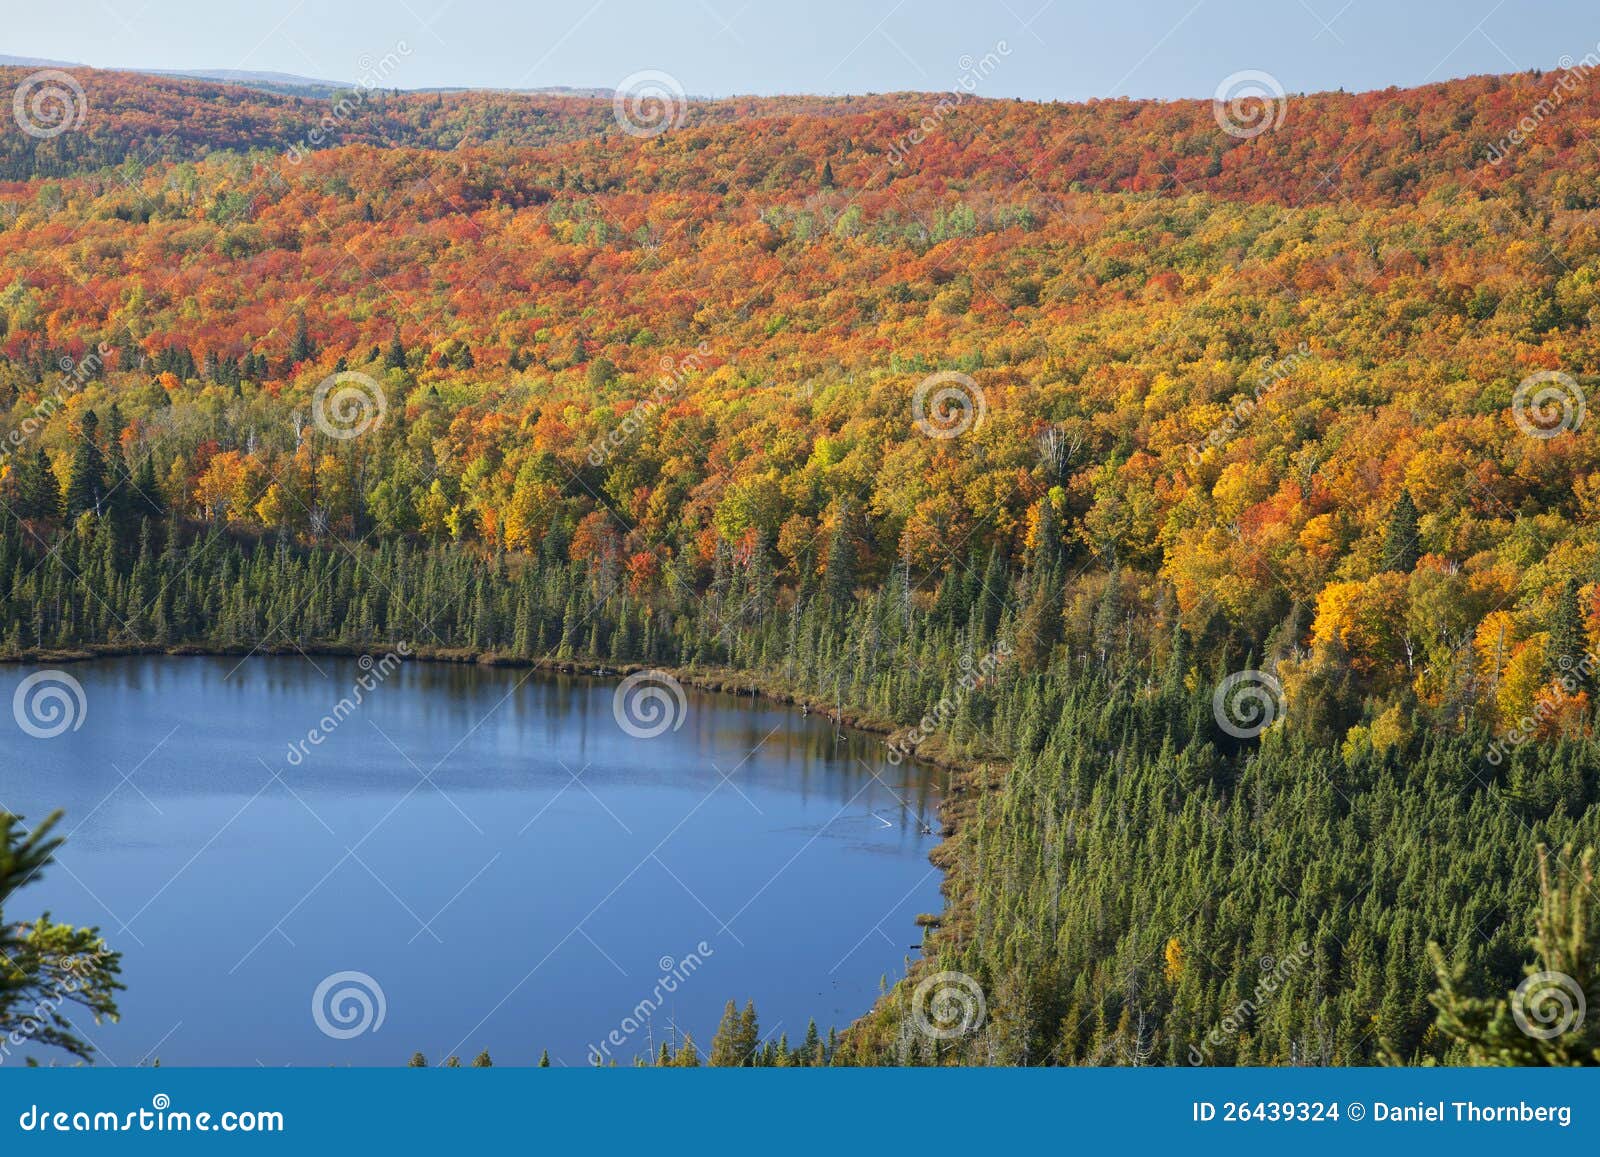 blue lake amid colorful fall trees in minnesota